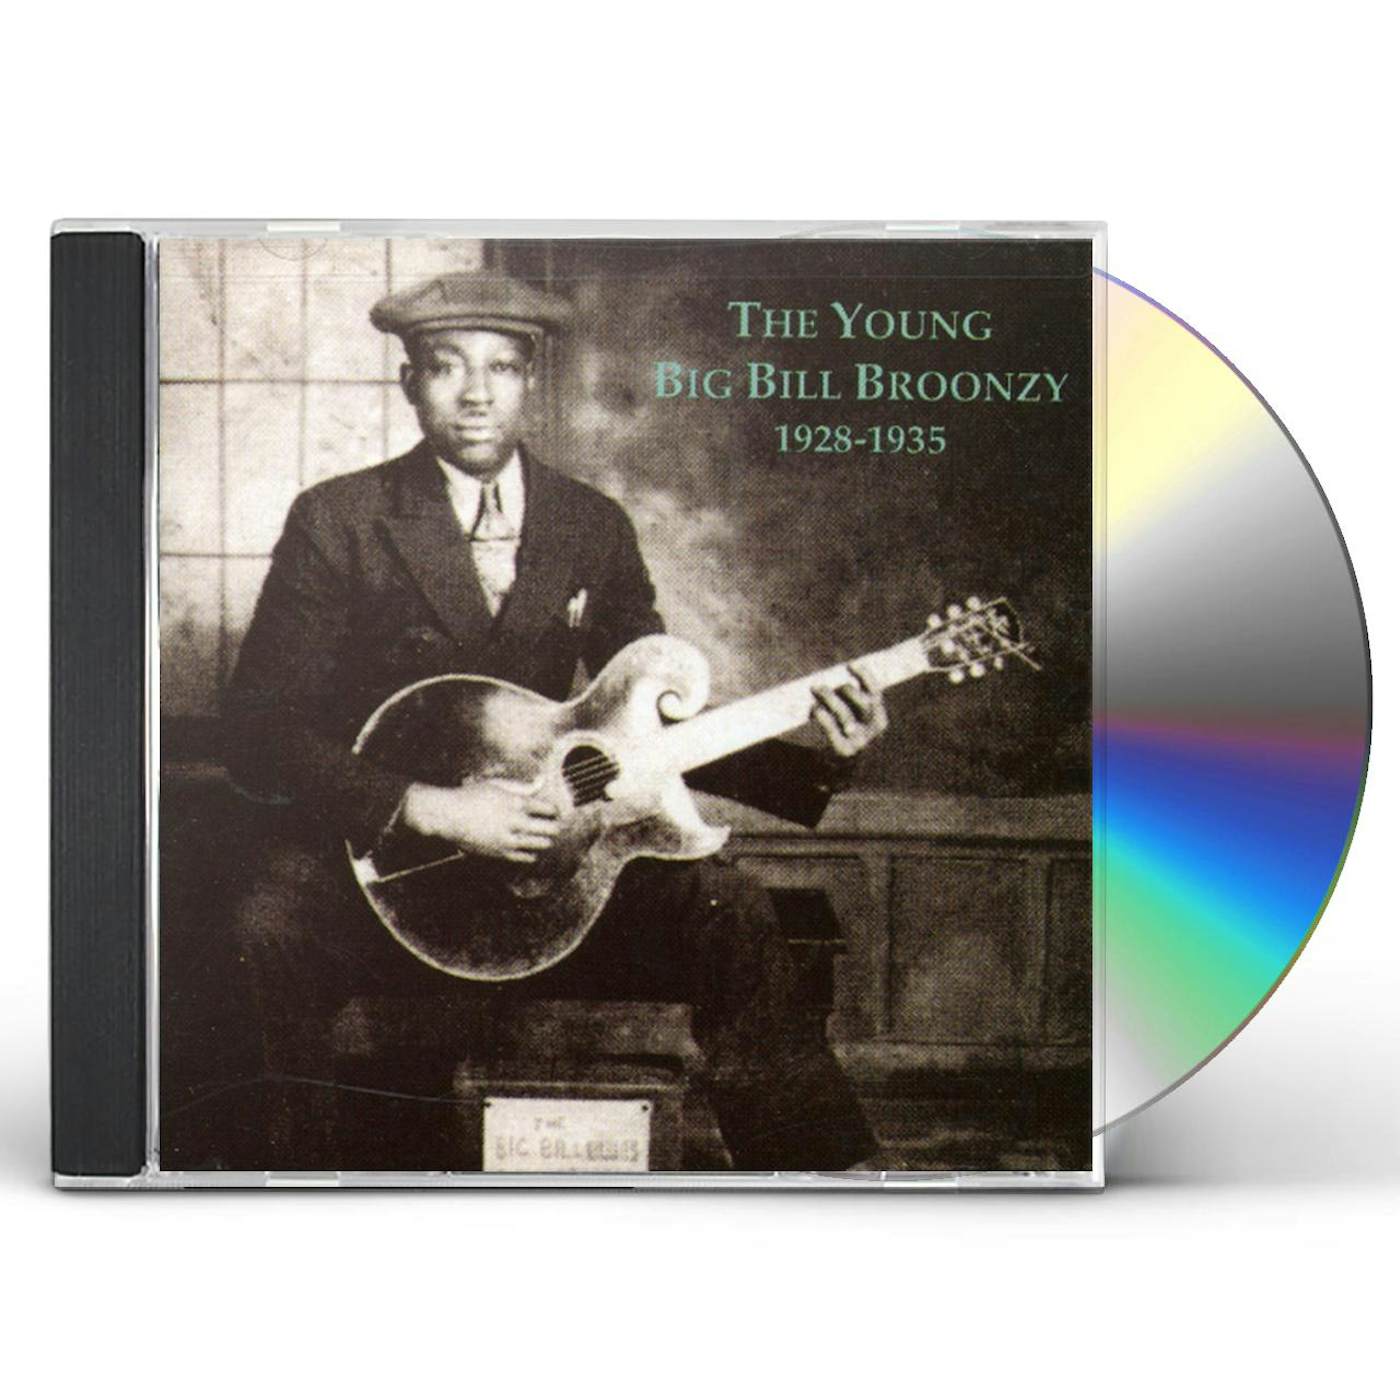 YOUNG BIG BILL BROONZY 1928-1935 CD